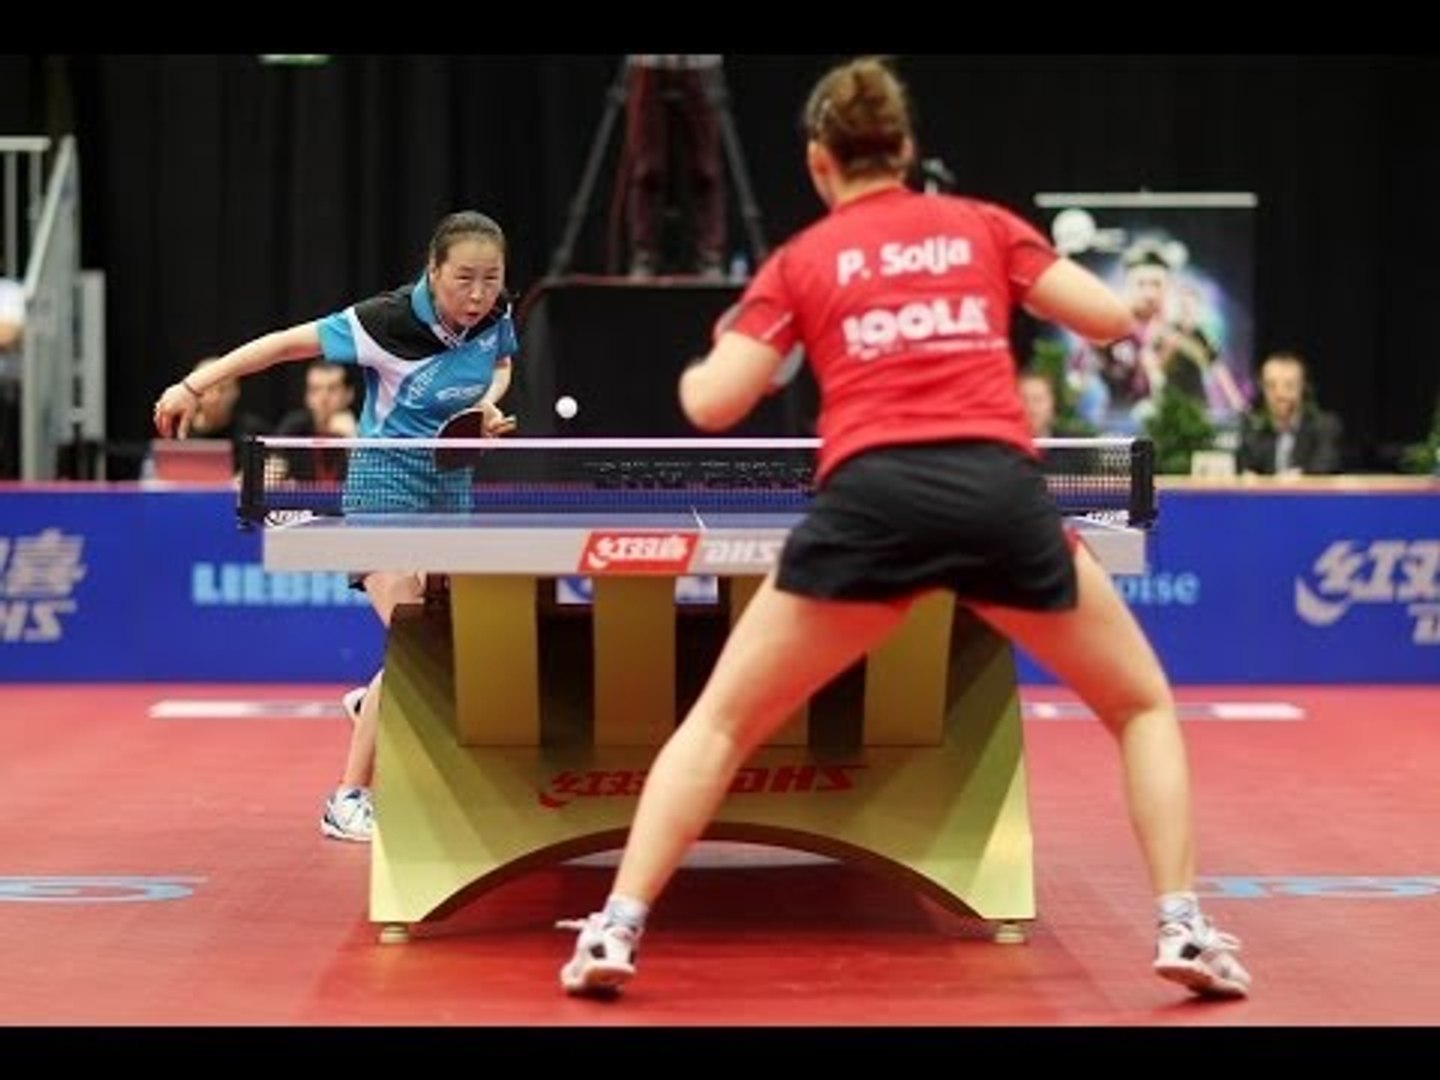 DHS Europe Cup 2014 Highlights: Petrissa Solja vs Li Jiao - video  Dailymotion